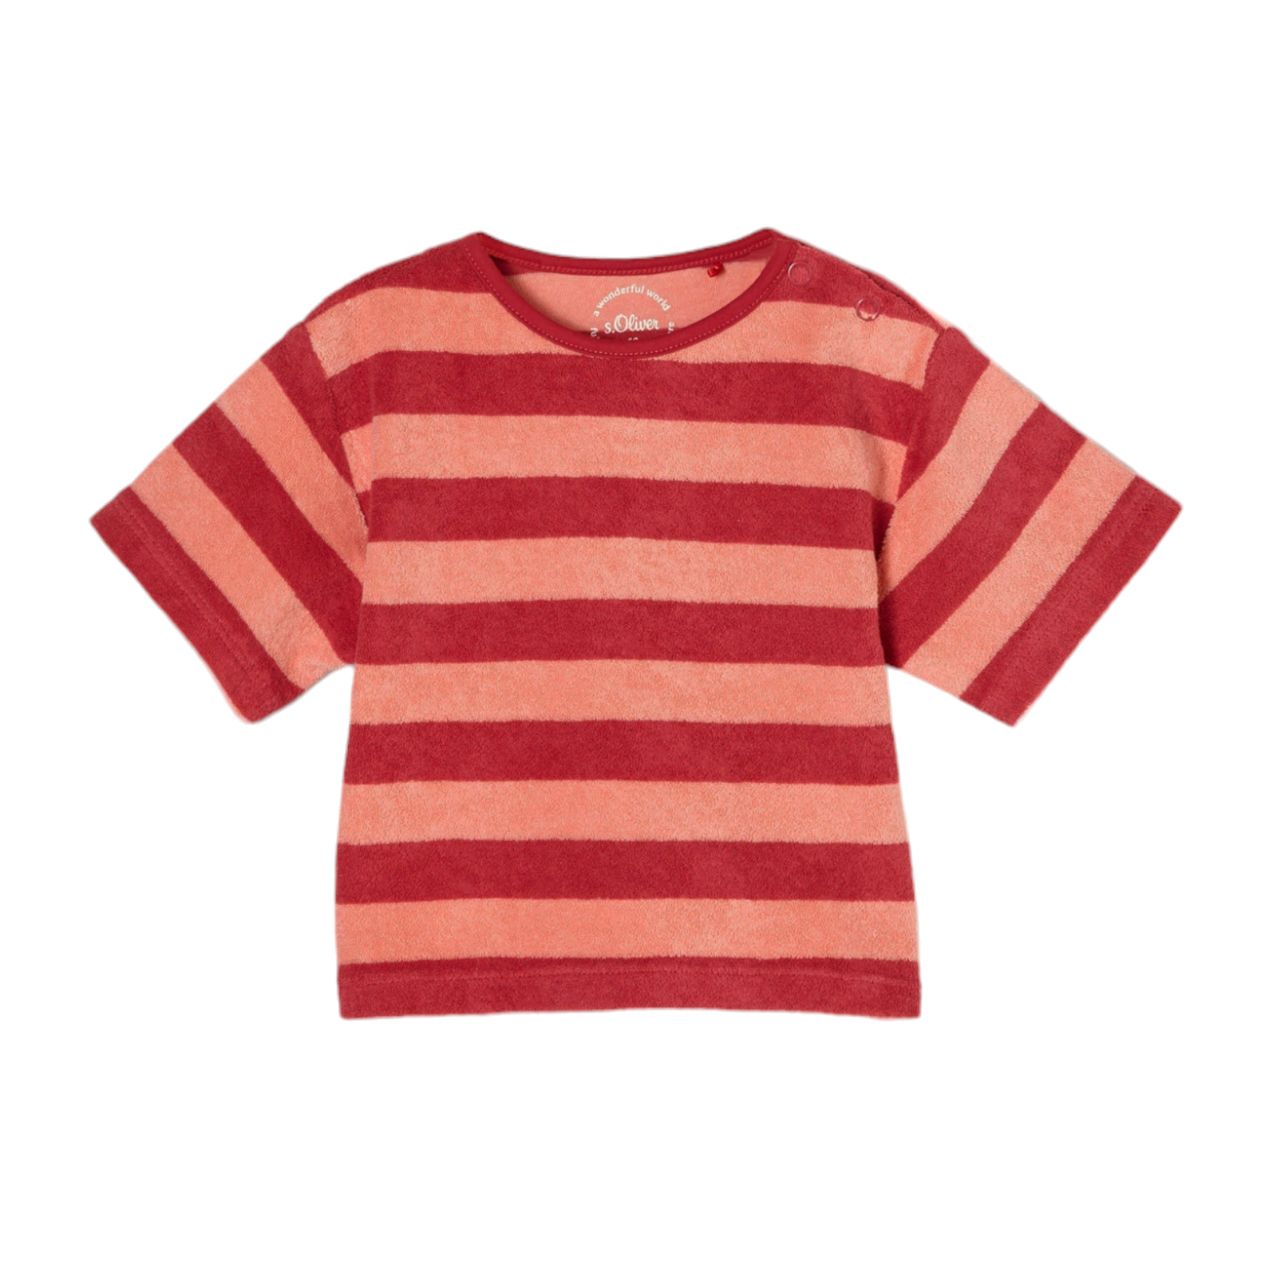 تی شرت آستین کوتاه نوزادی اس.اولیور کد 4908 -  - 1